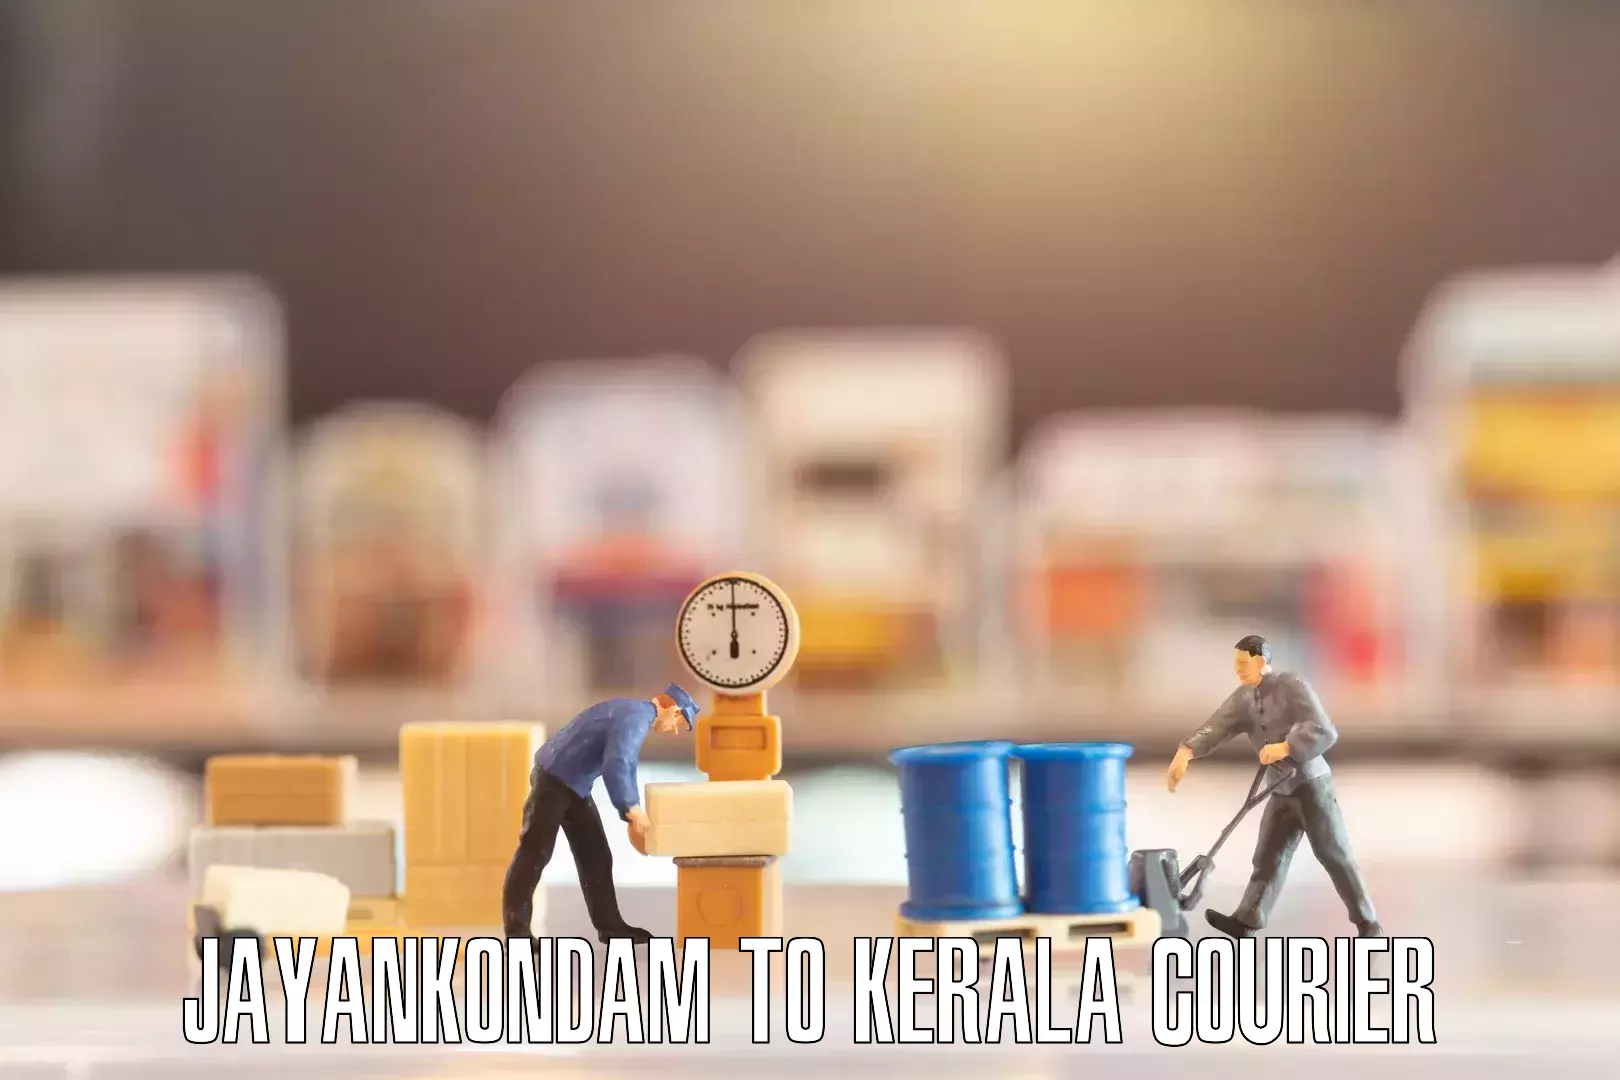 Packing and moving services Jayankondam to Kerala